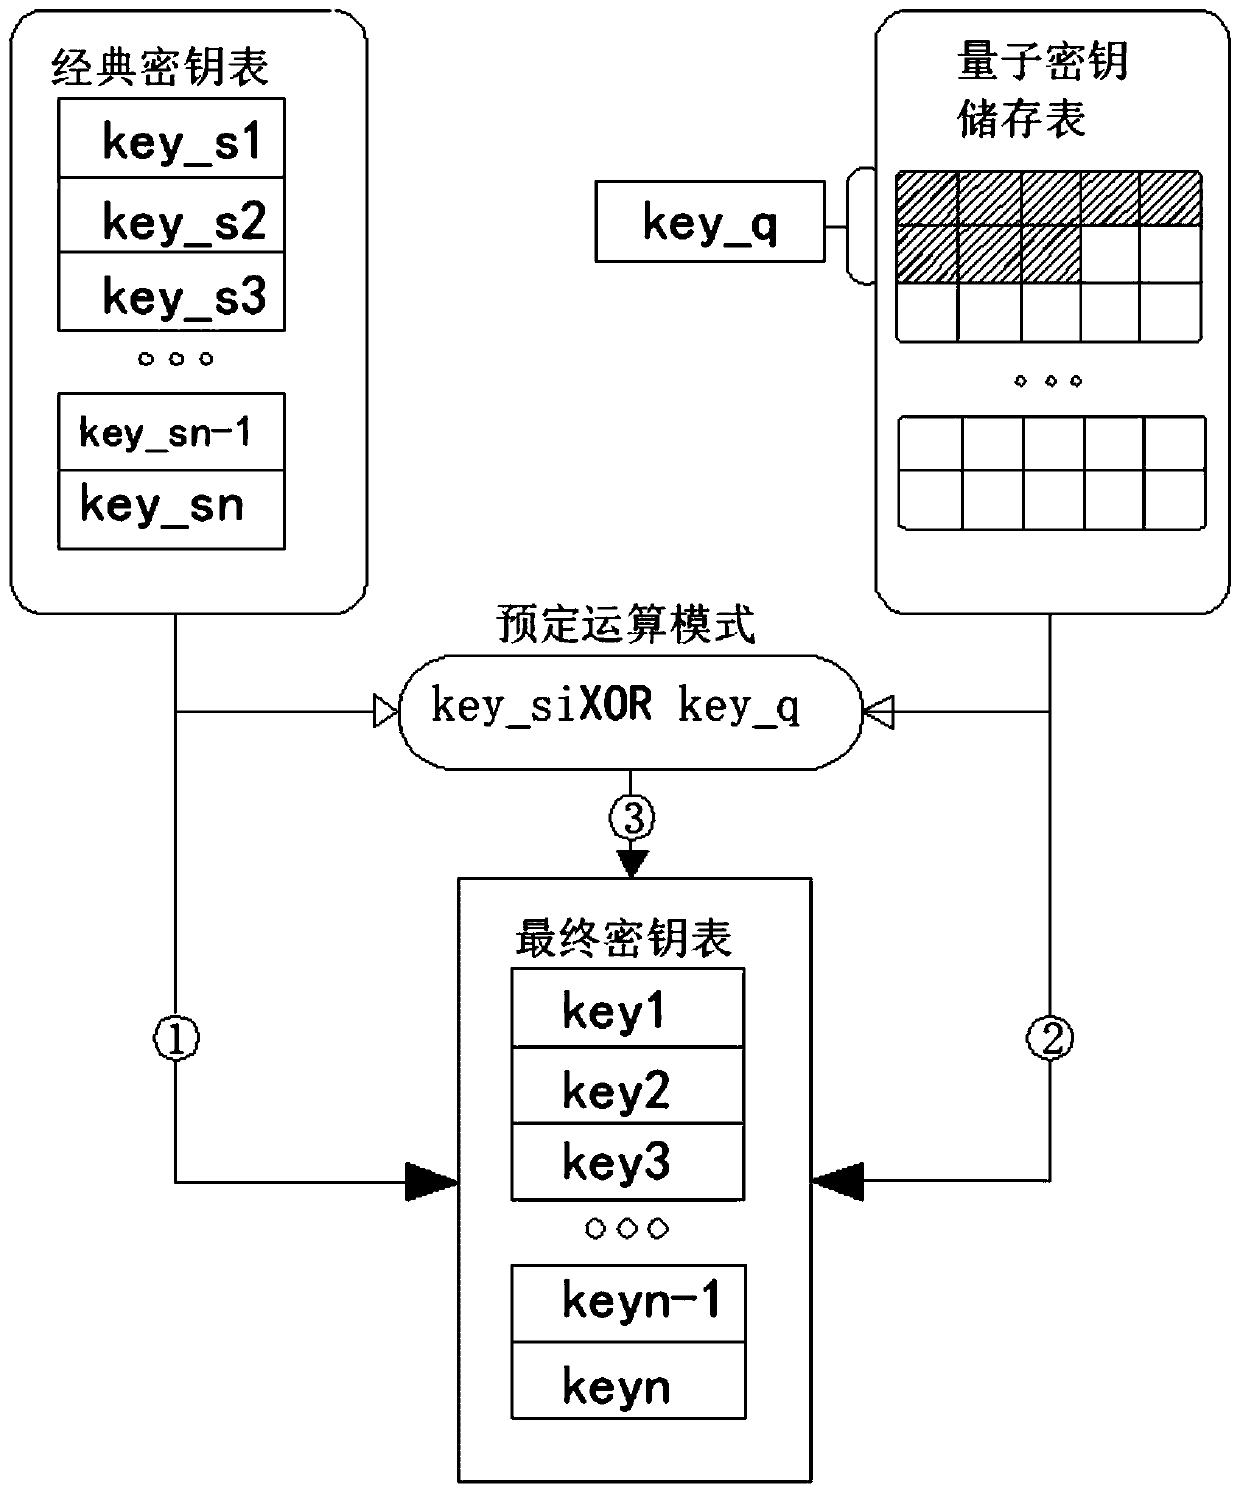 Self-adaptive key distribution mechanism based on QKD network